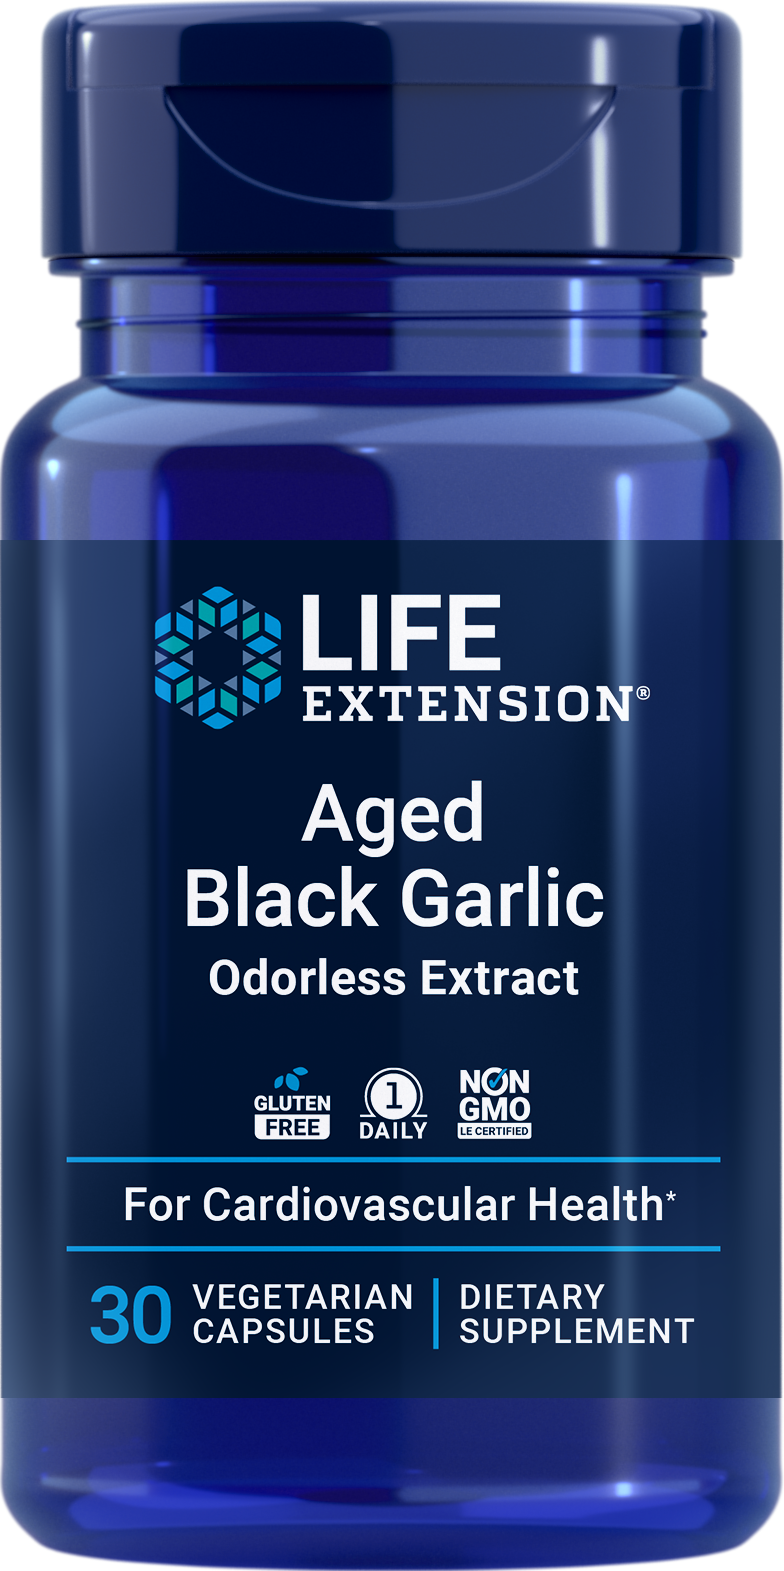 Life Extension’s new Aged Black Garlic supplement nonGMO Gluten Free      